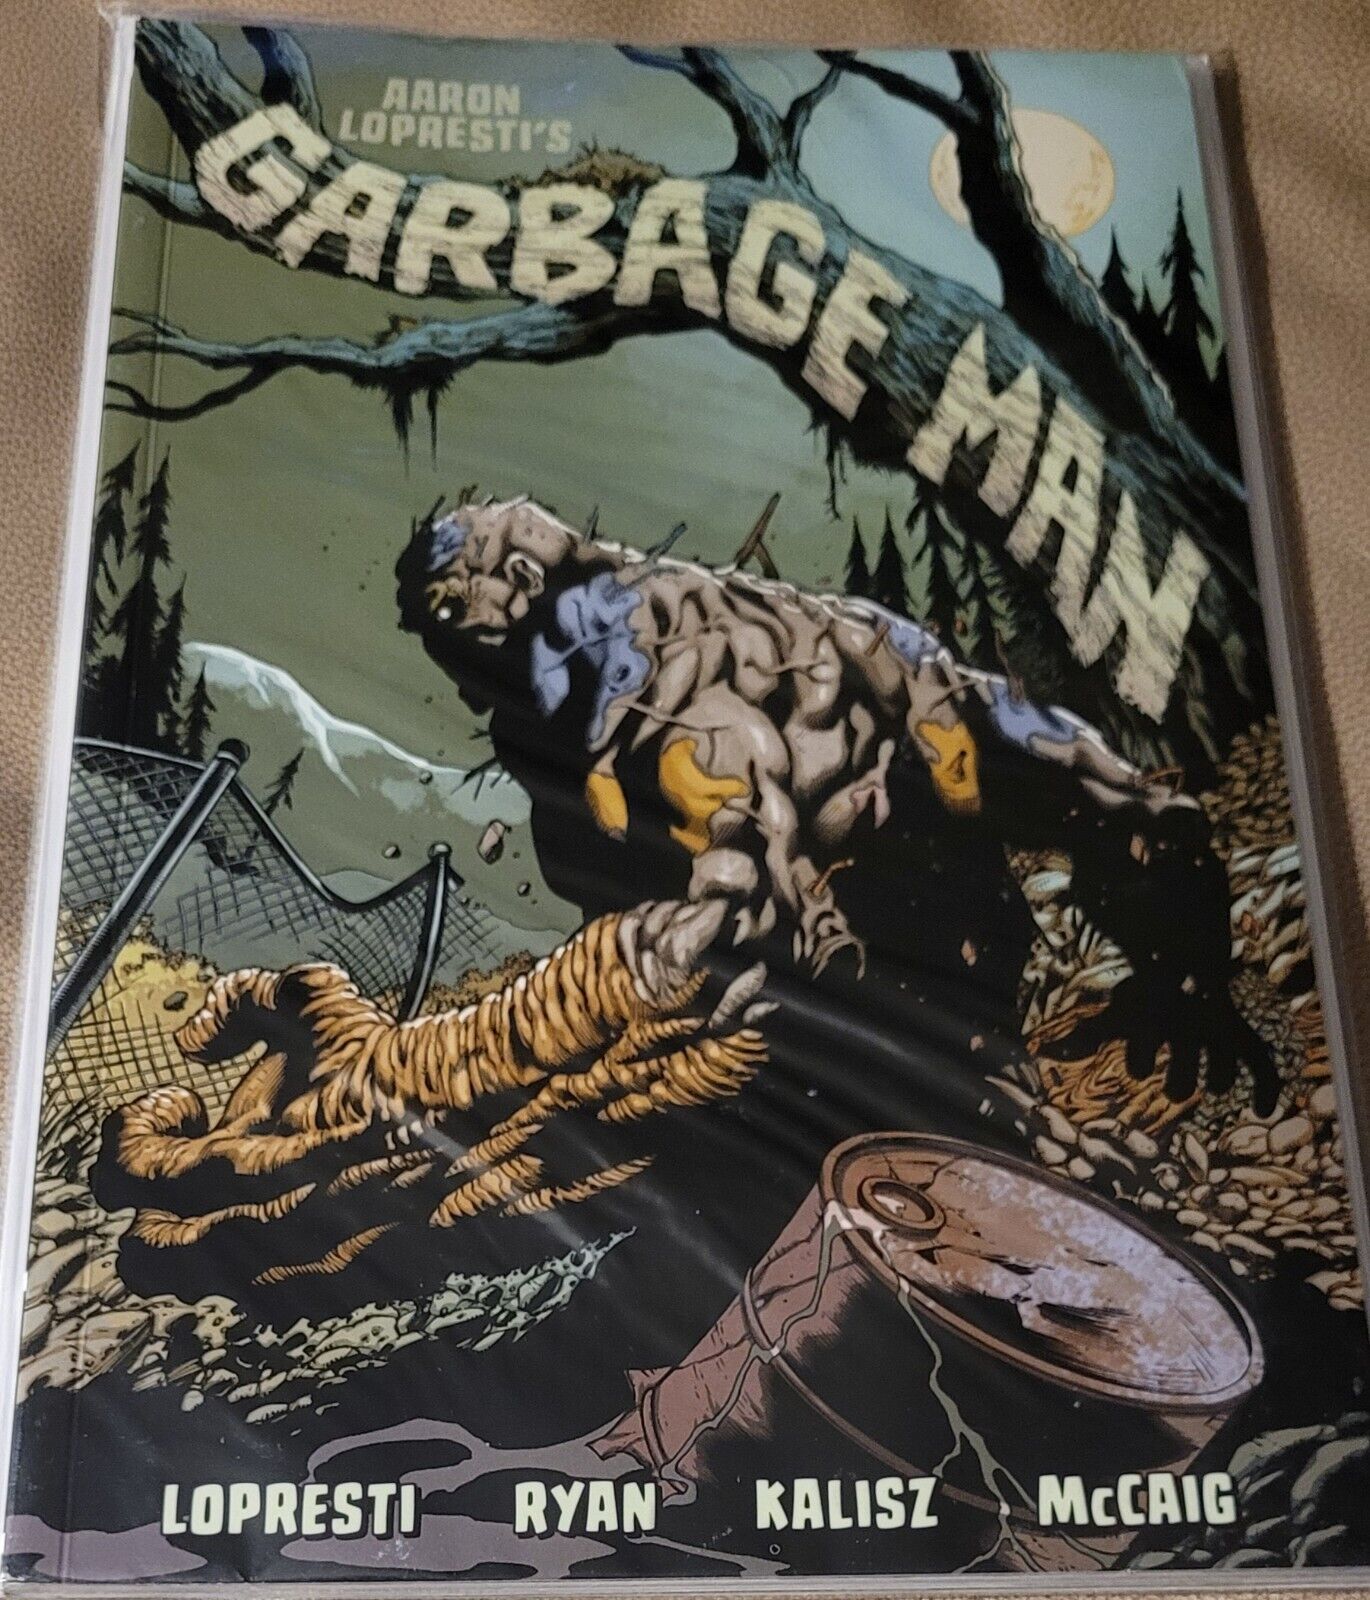 Garbage Man Graphic Novel By Aaron Lopresti (Unread/Unsealed)